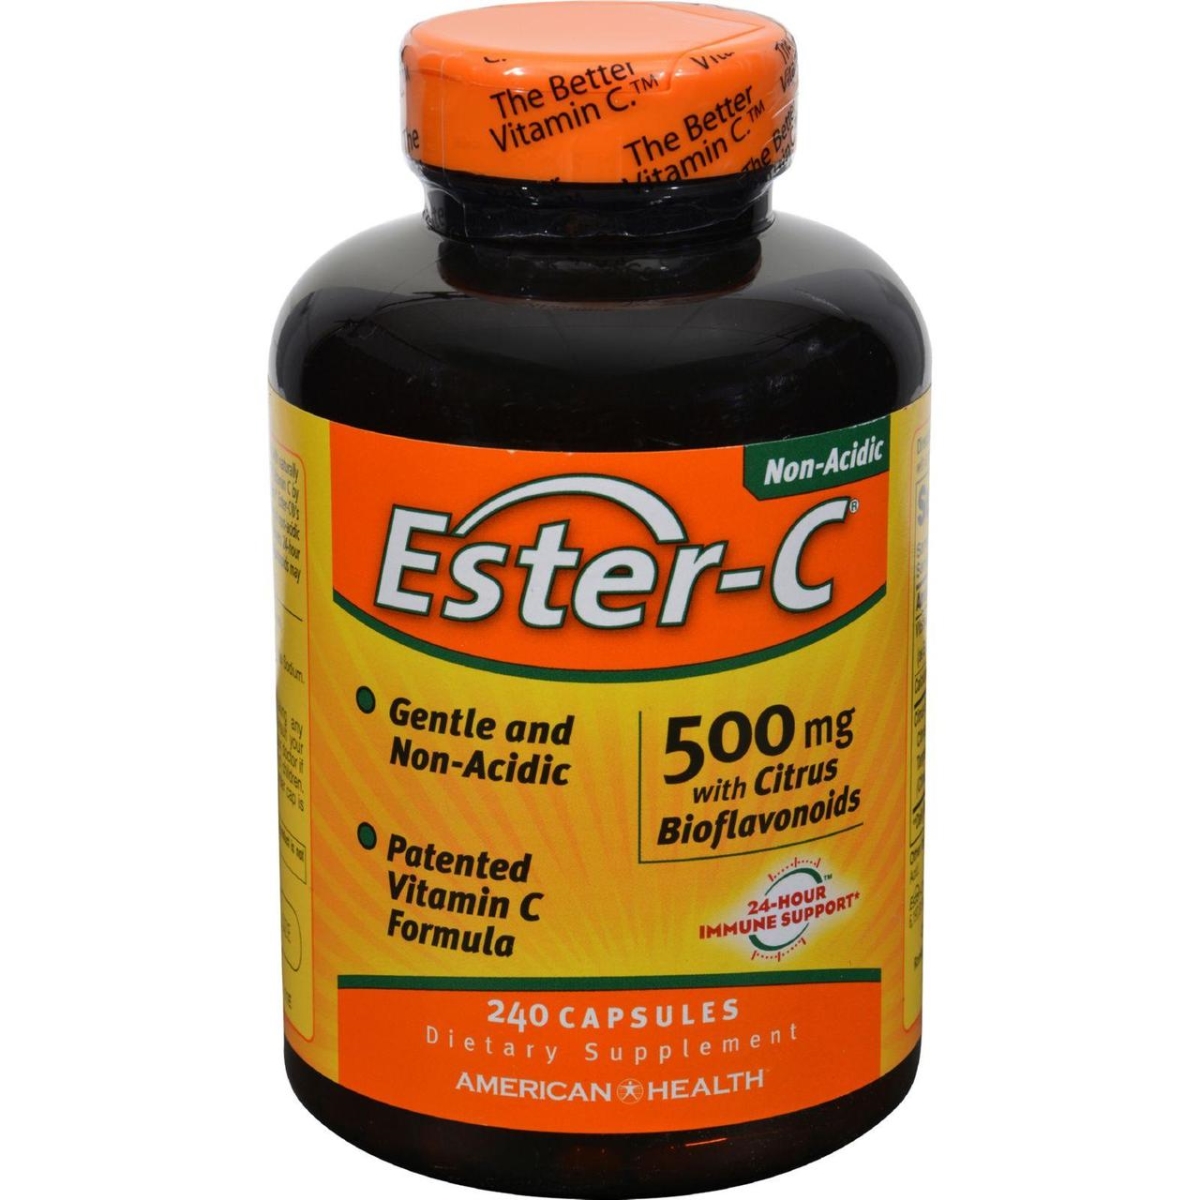 American Health Hg0888057 500 Mg Ester-c With Citrus Bioflavonoids, 240 Capsules